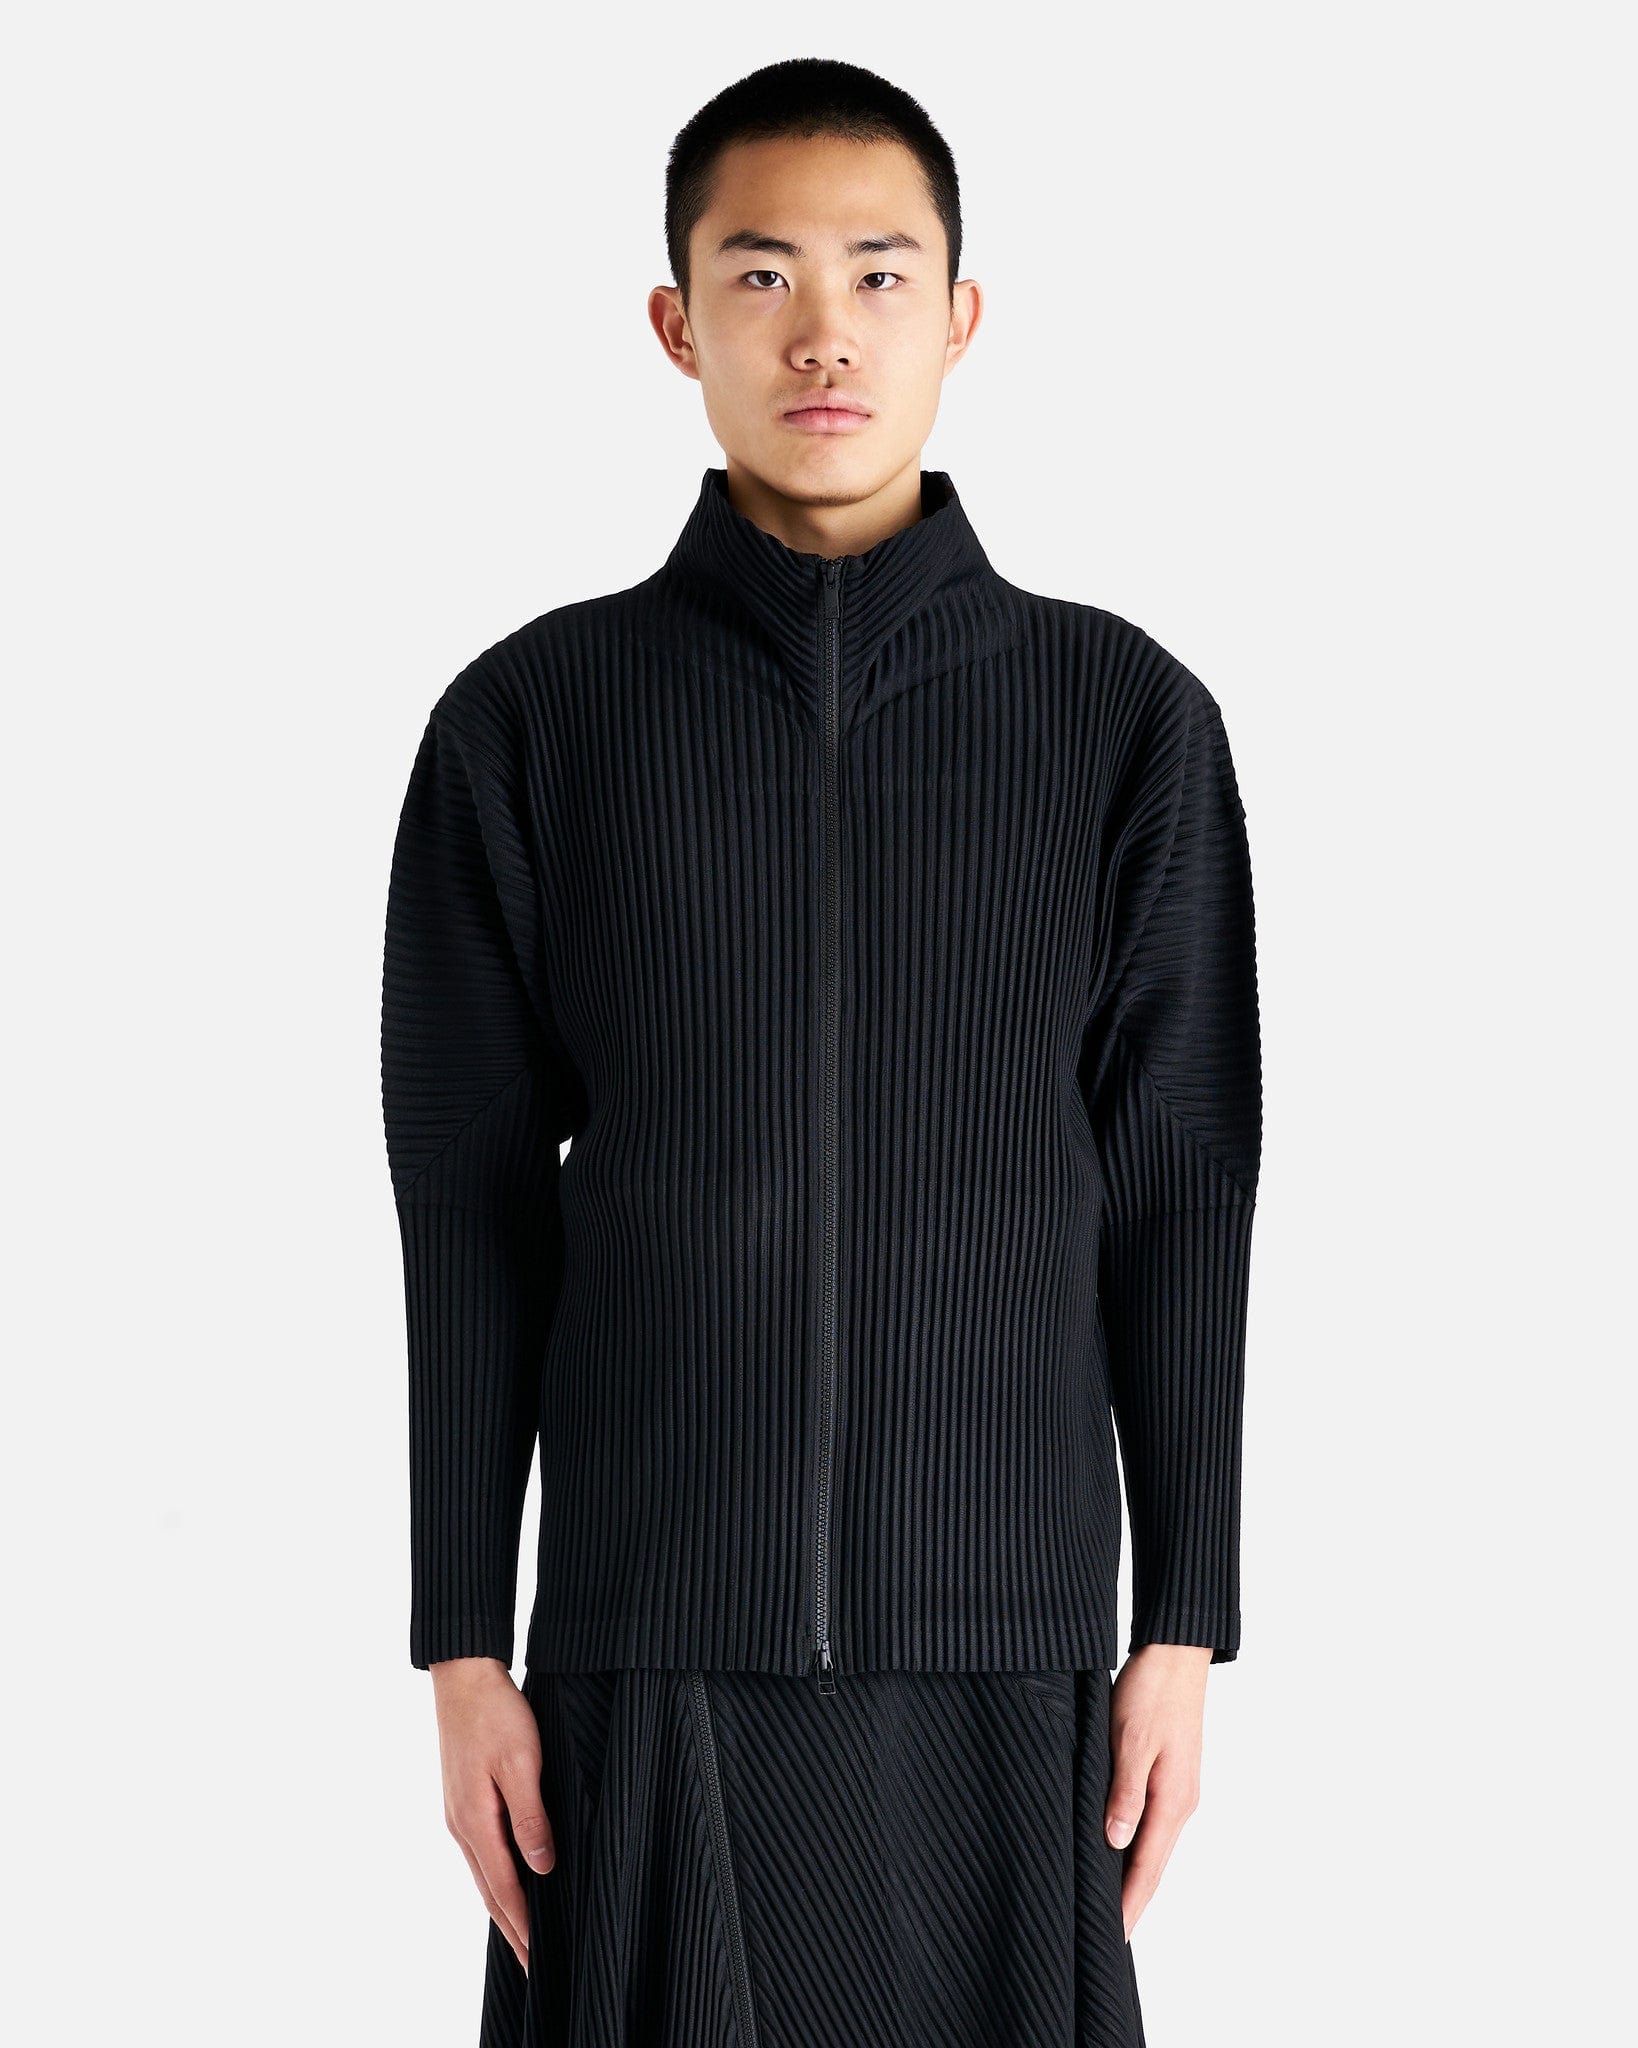 Homme Plissé Issey Miyake Men's Sweater Basics Cardigan in Black